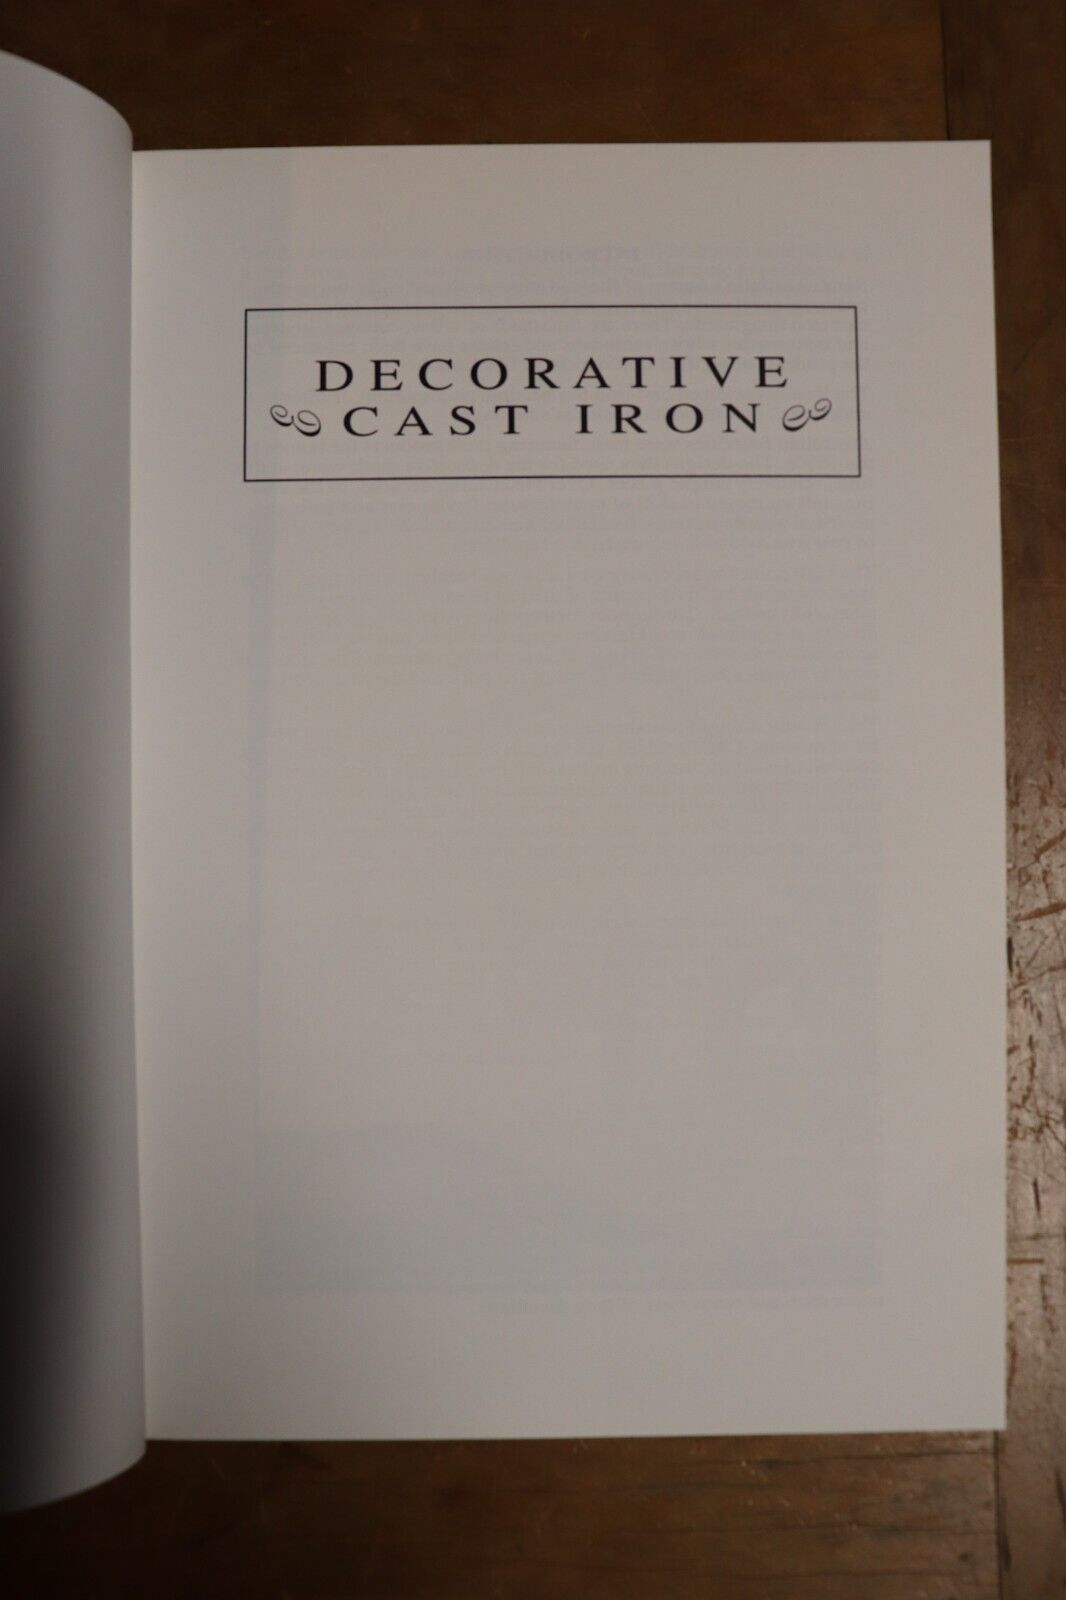 Decorative Cast Iron - 1995 - South Australian Architectural History Book - 0